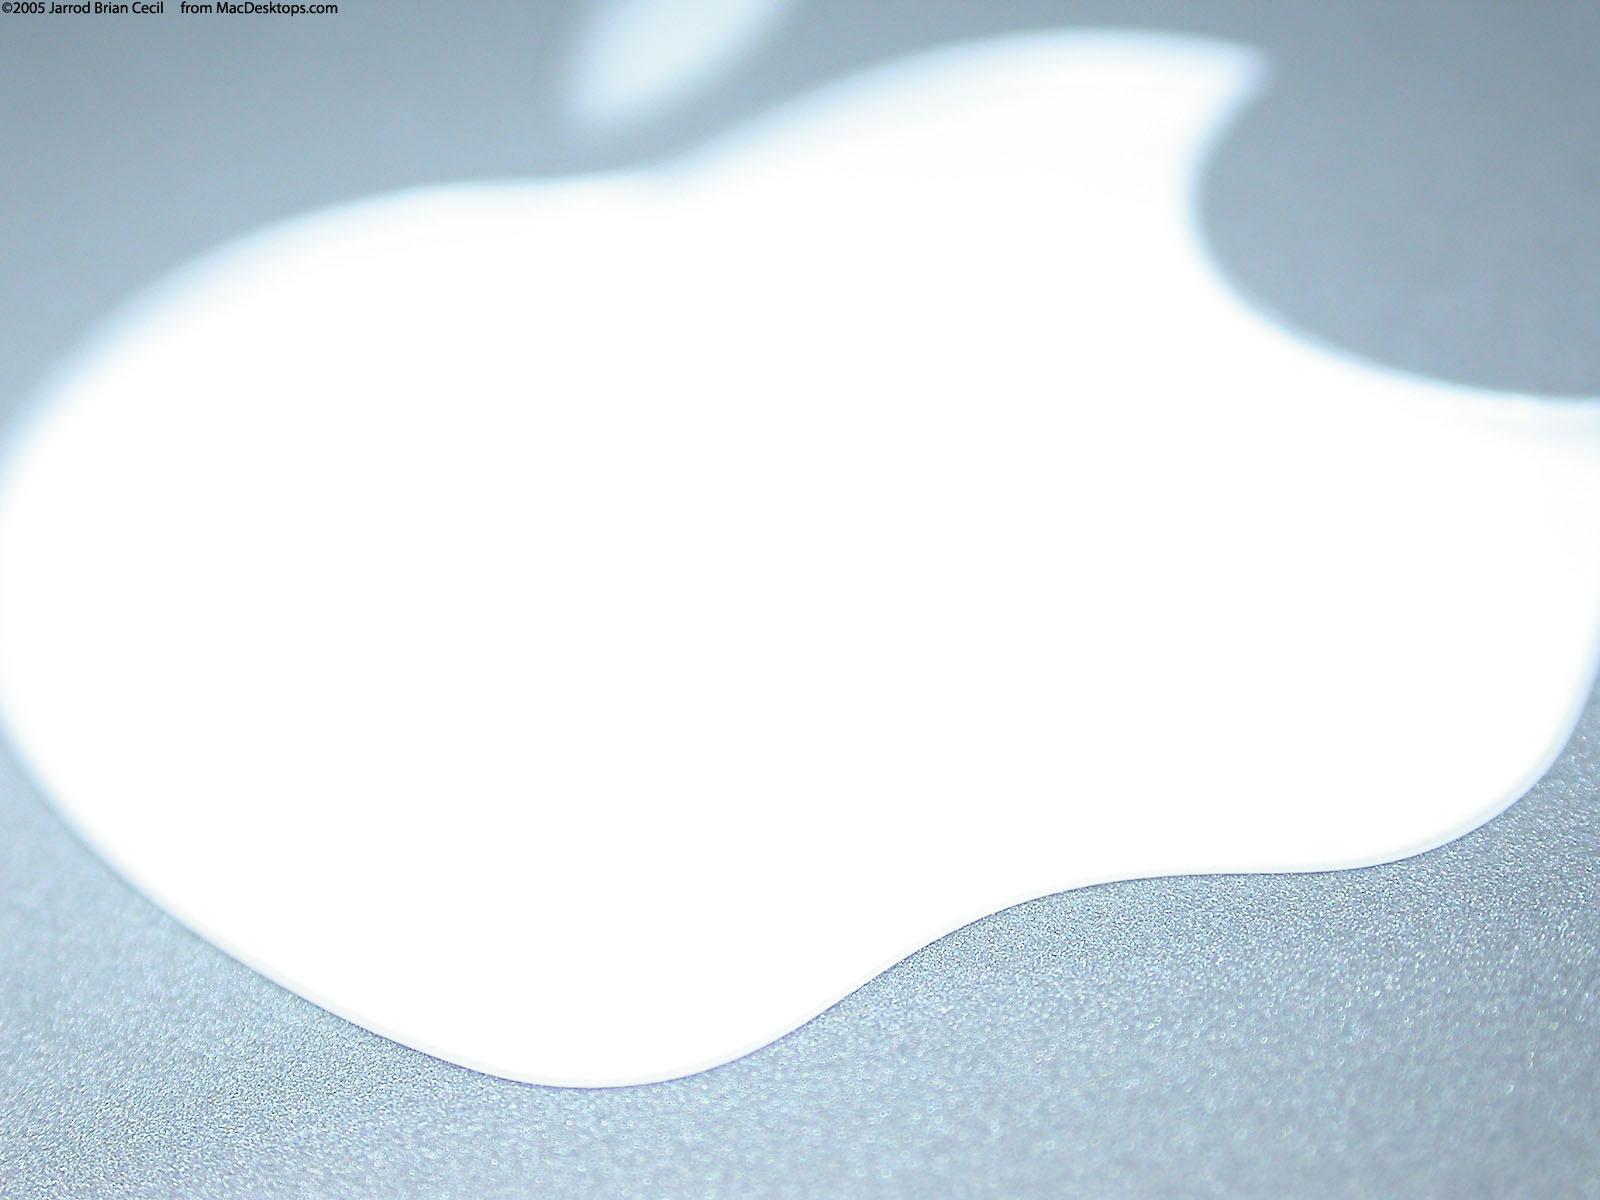 Glowing white Apple free desktop background wallpaper image